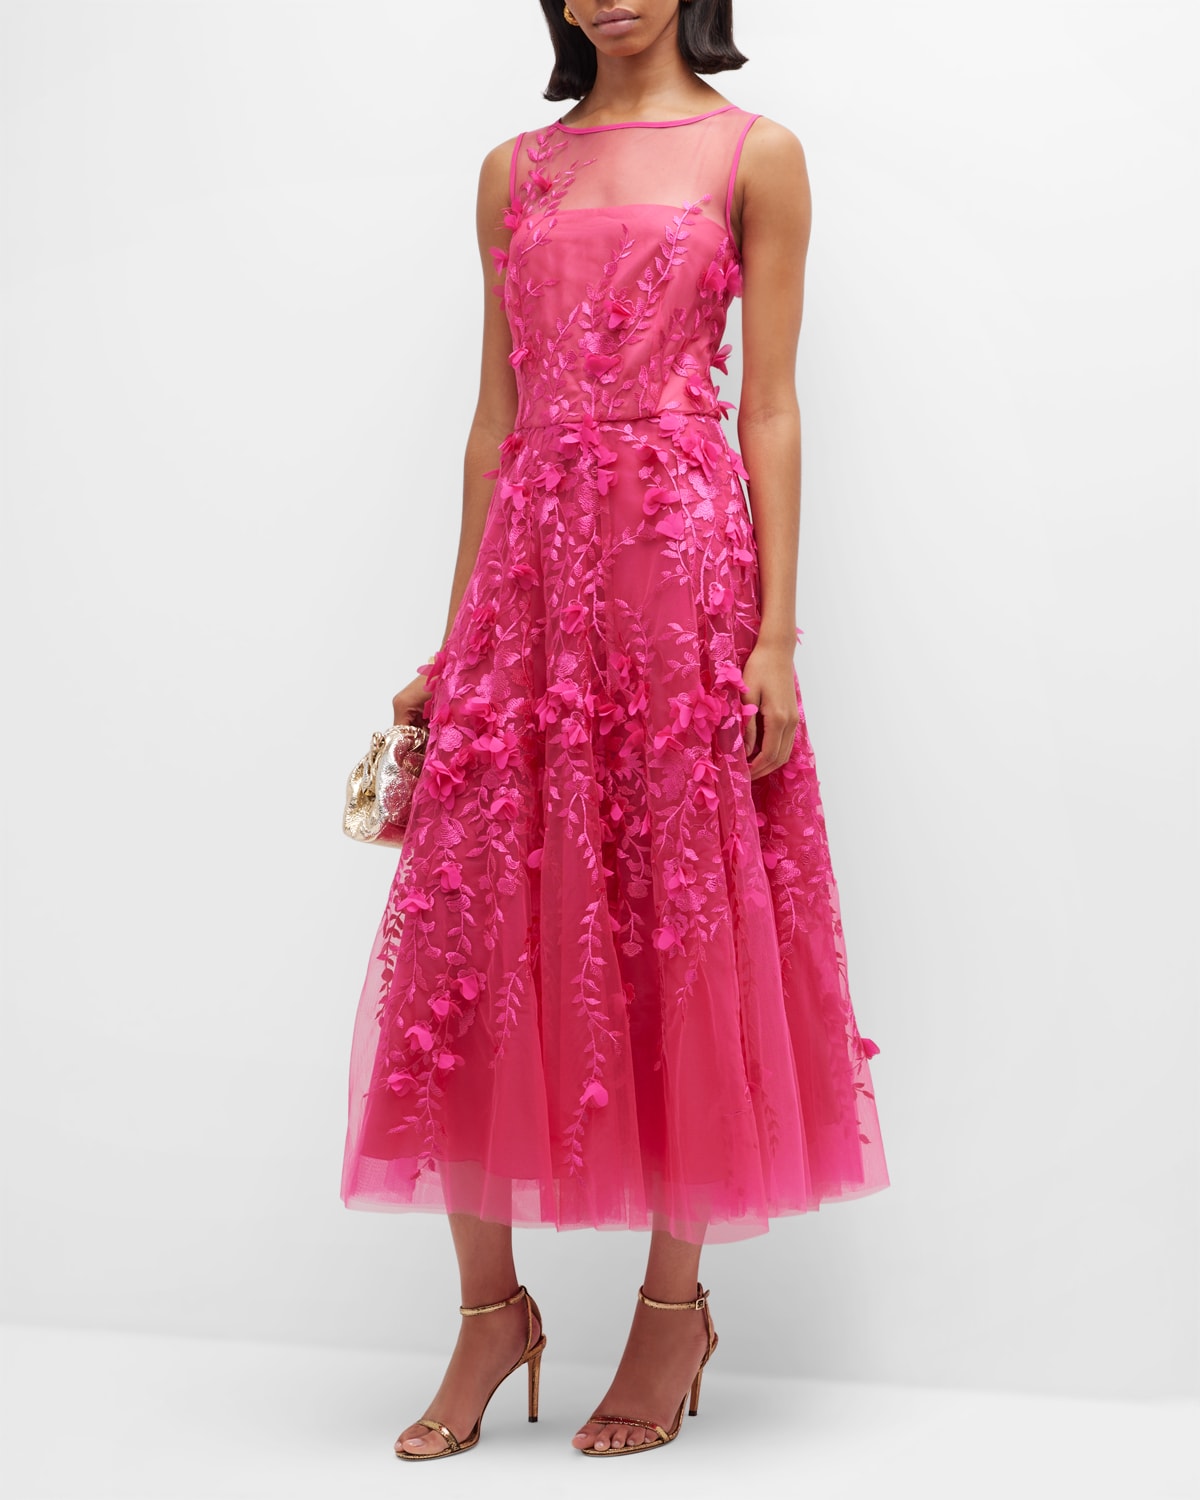 Tulle Midi Dress with Floral Applique Details